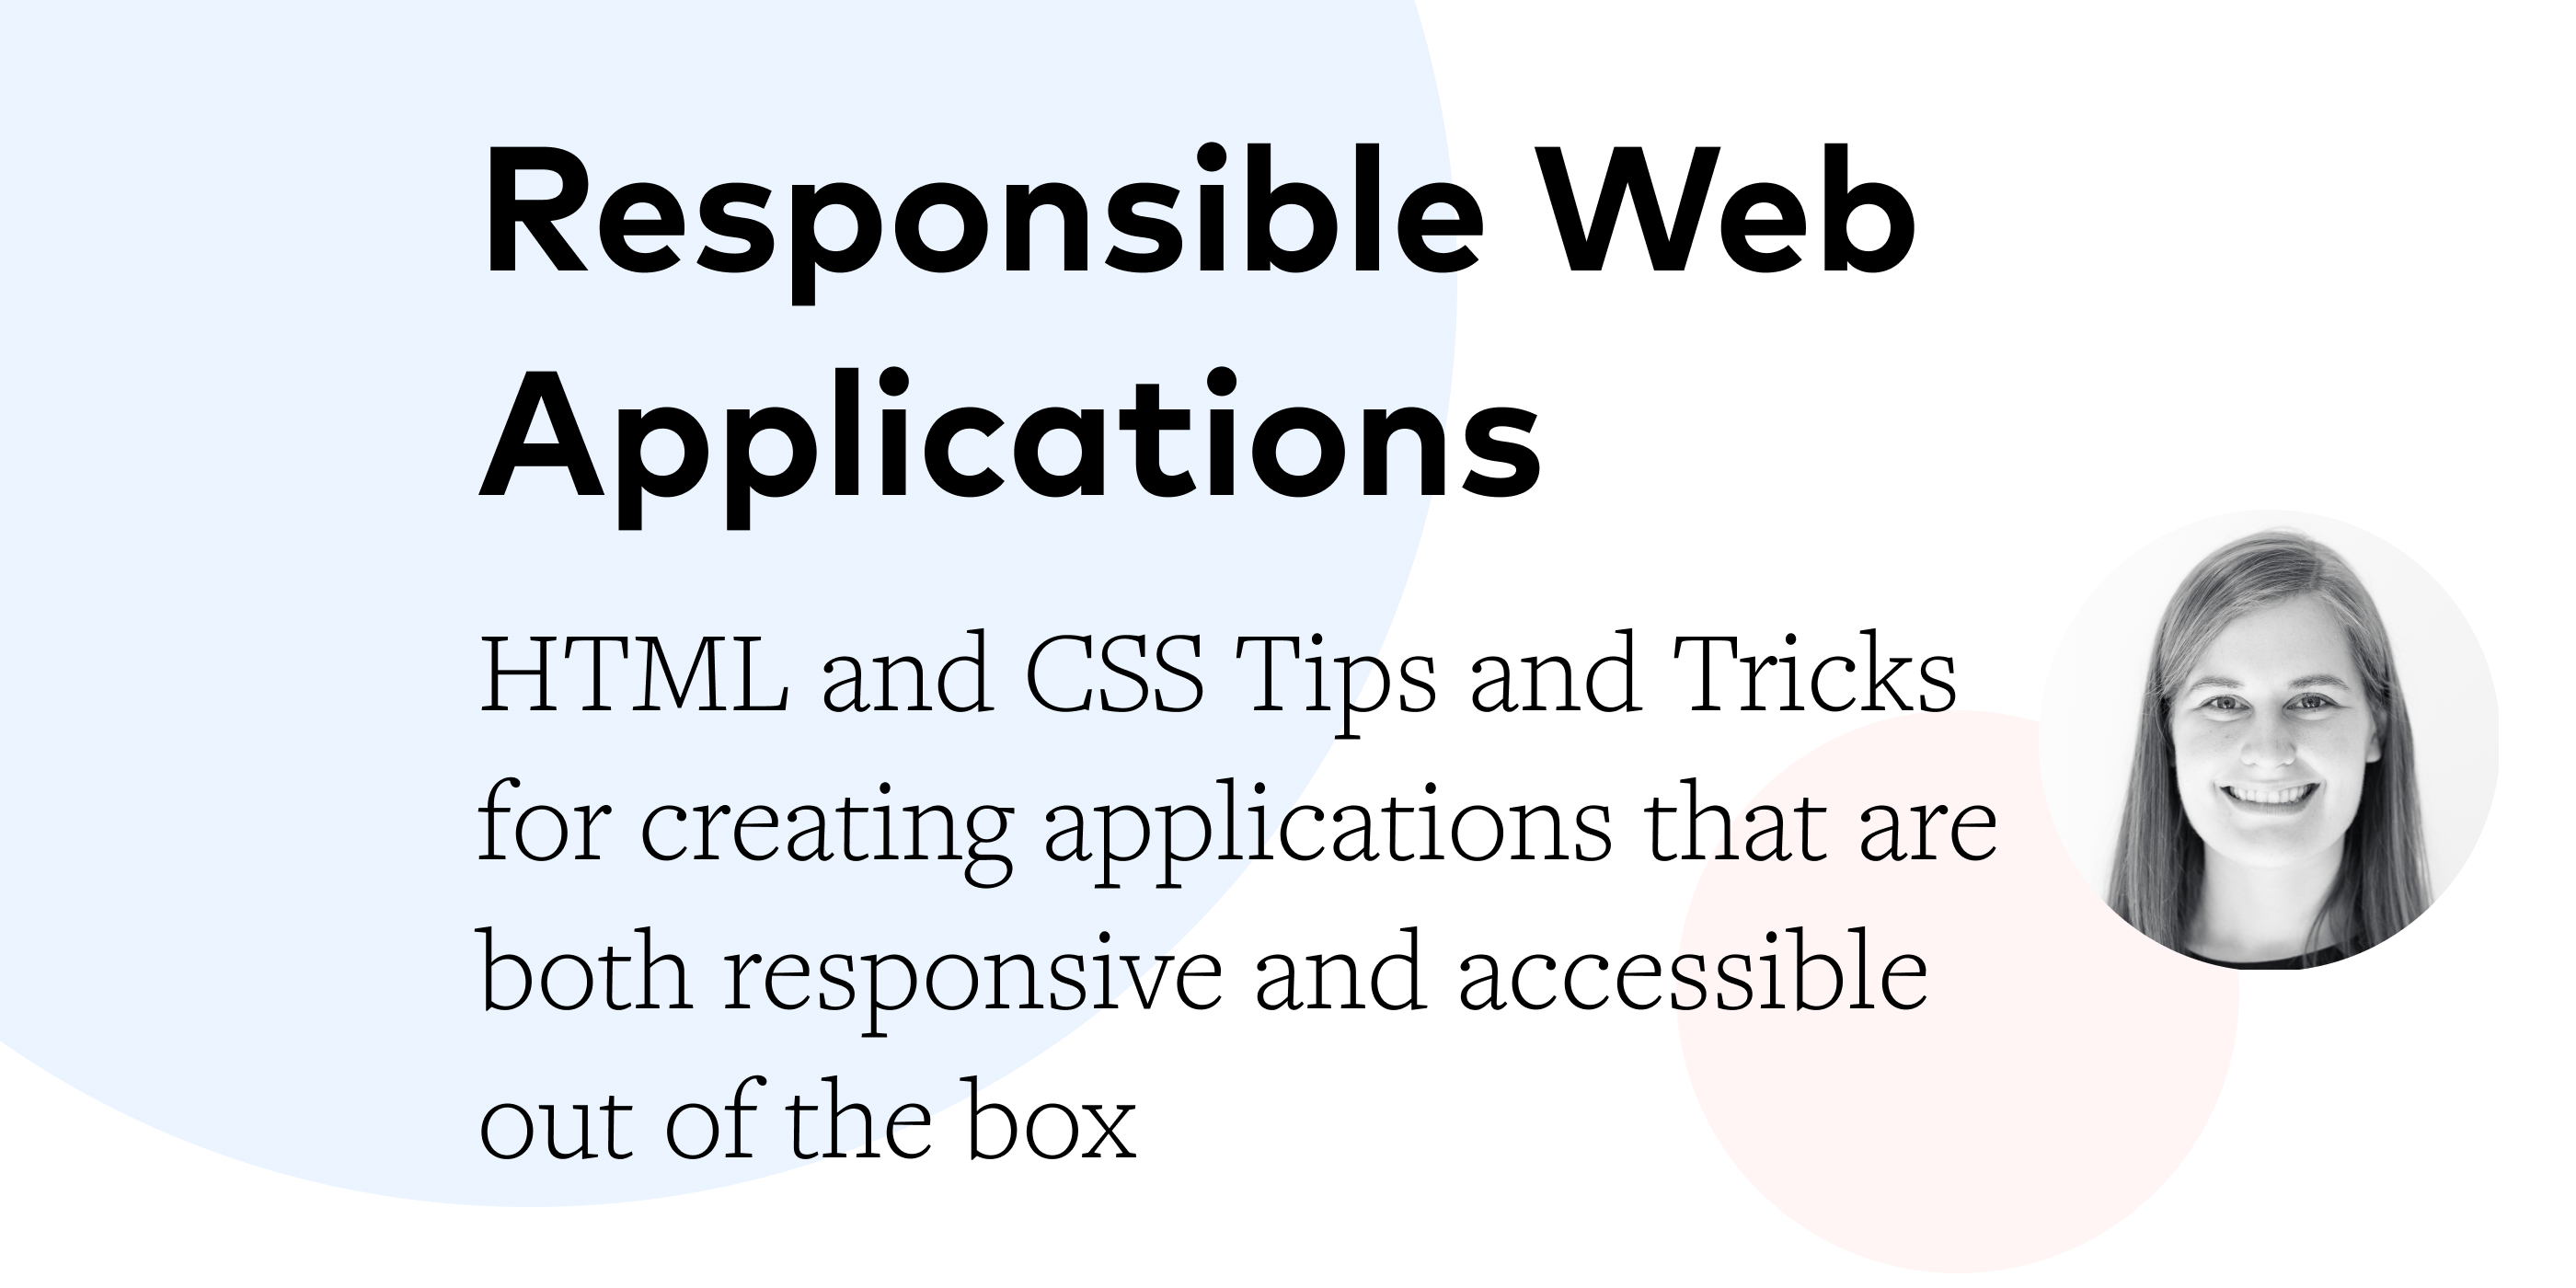 Responsible Web Applications